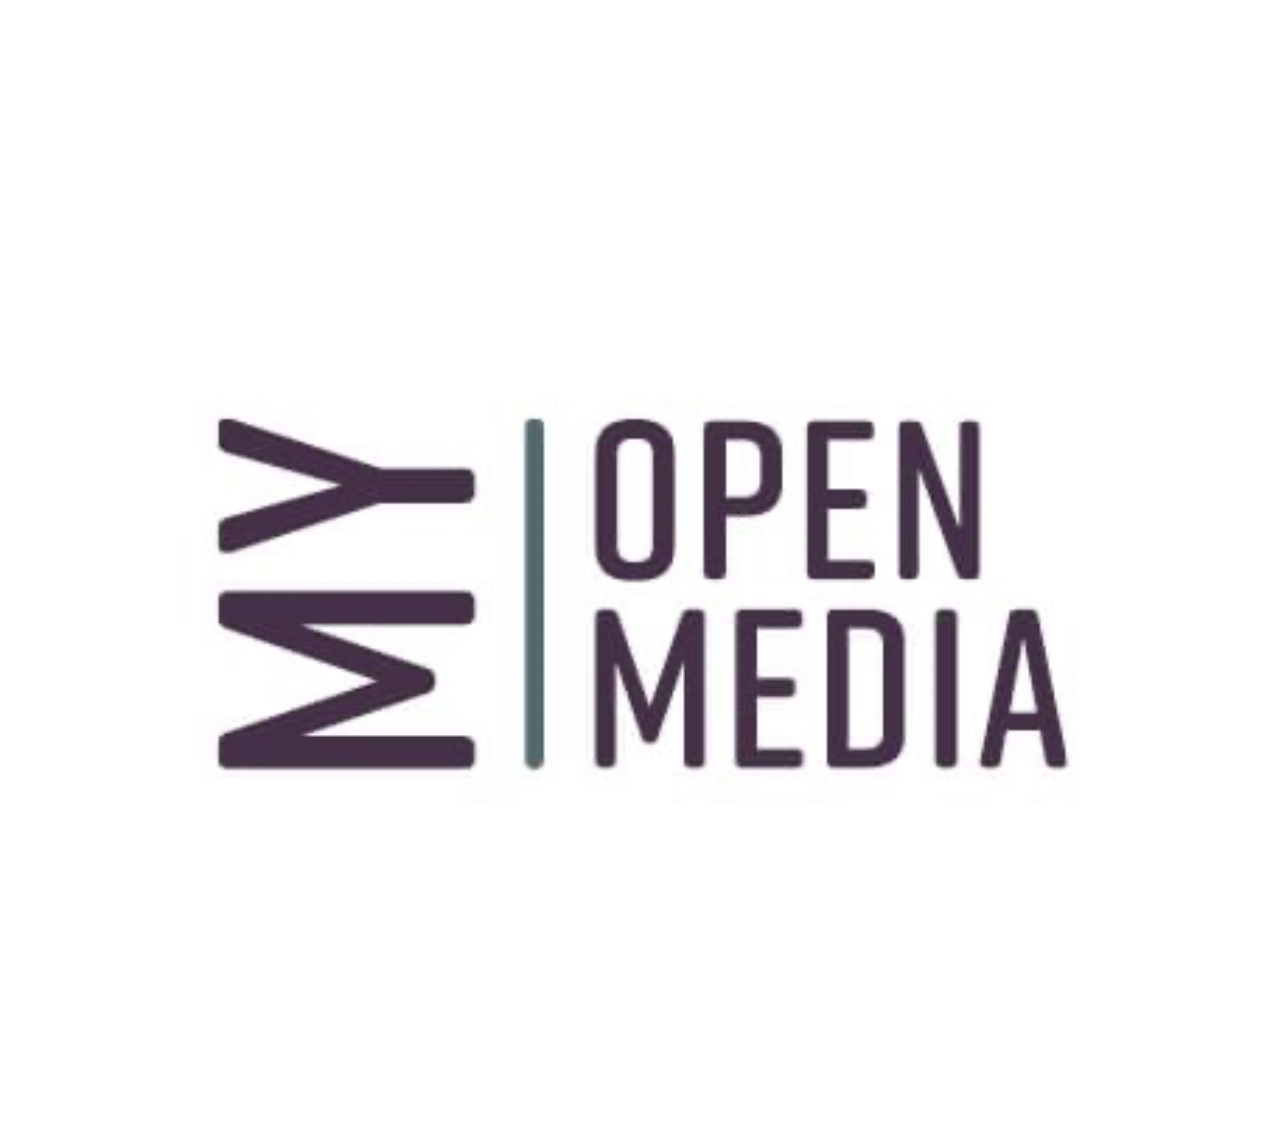 My Open Media